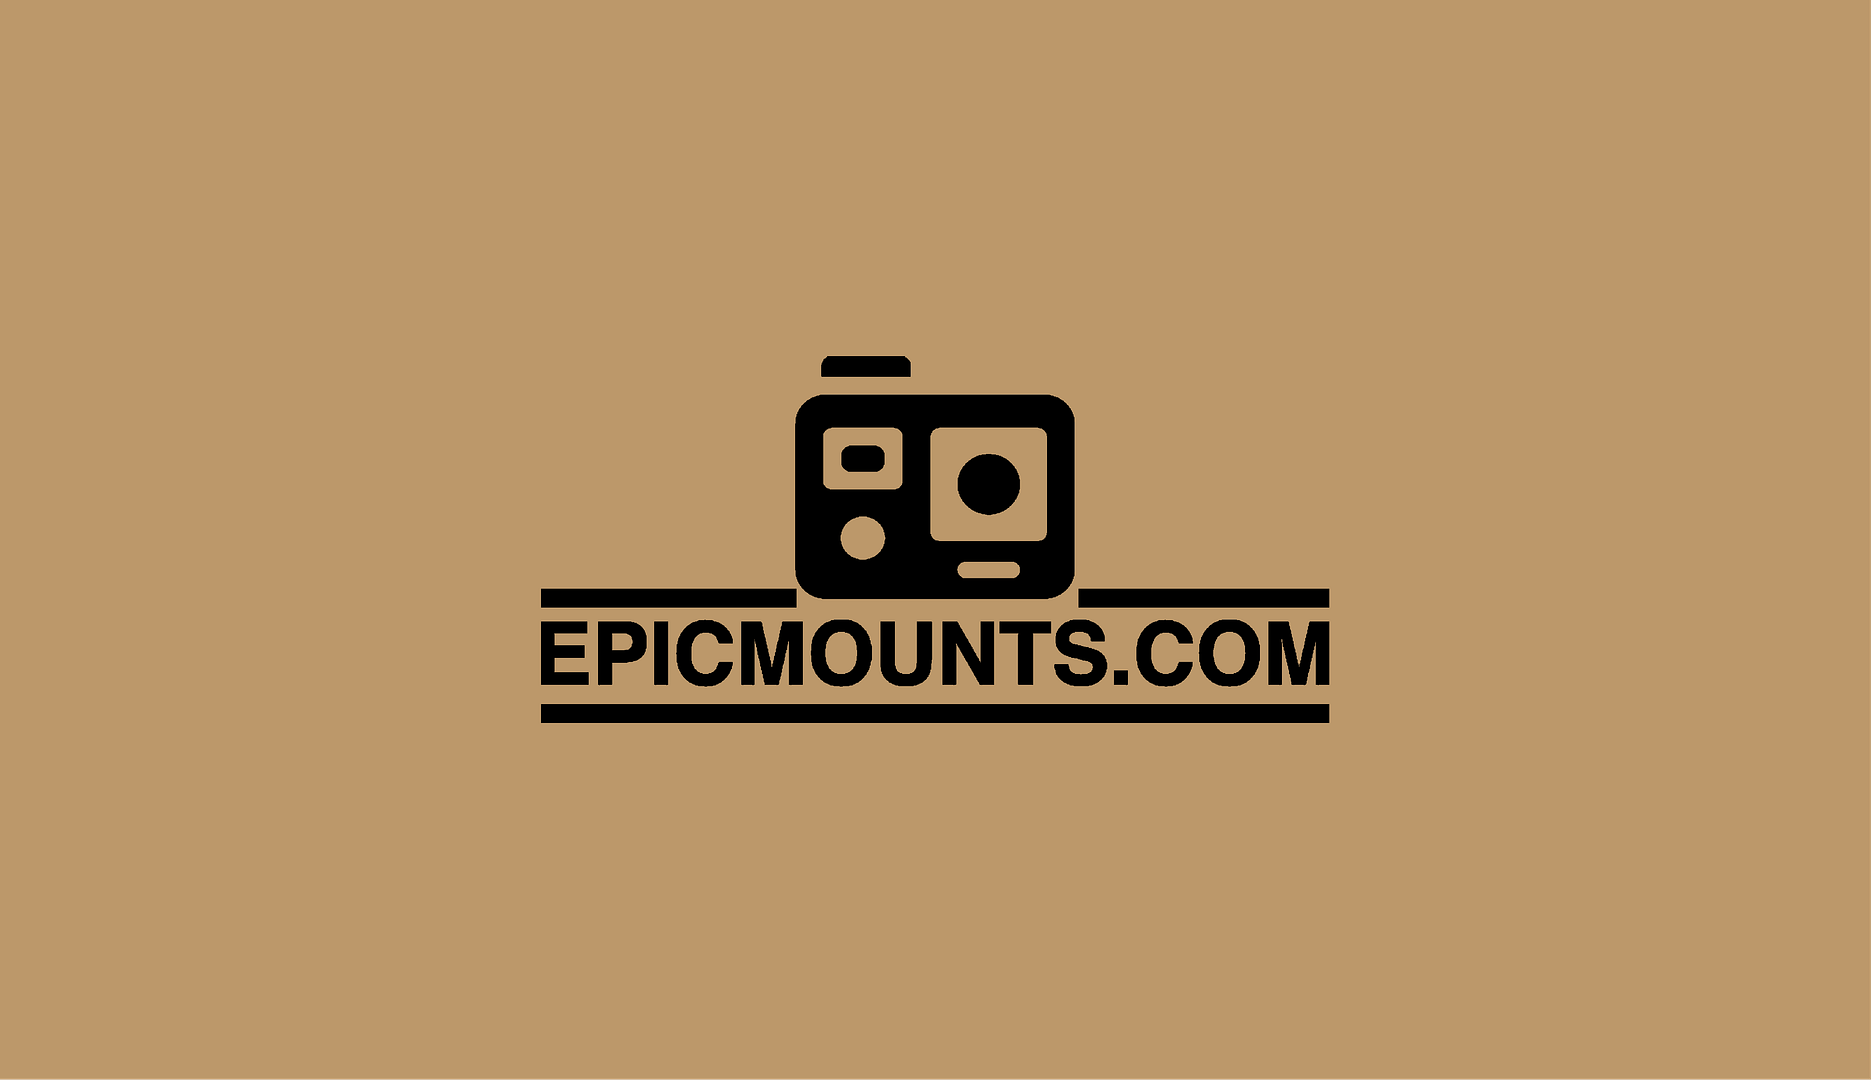 Epicmounts.com